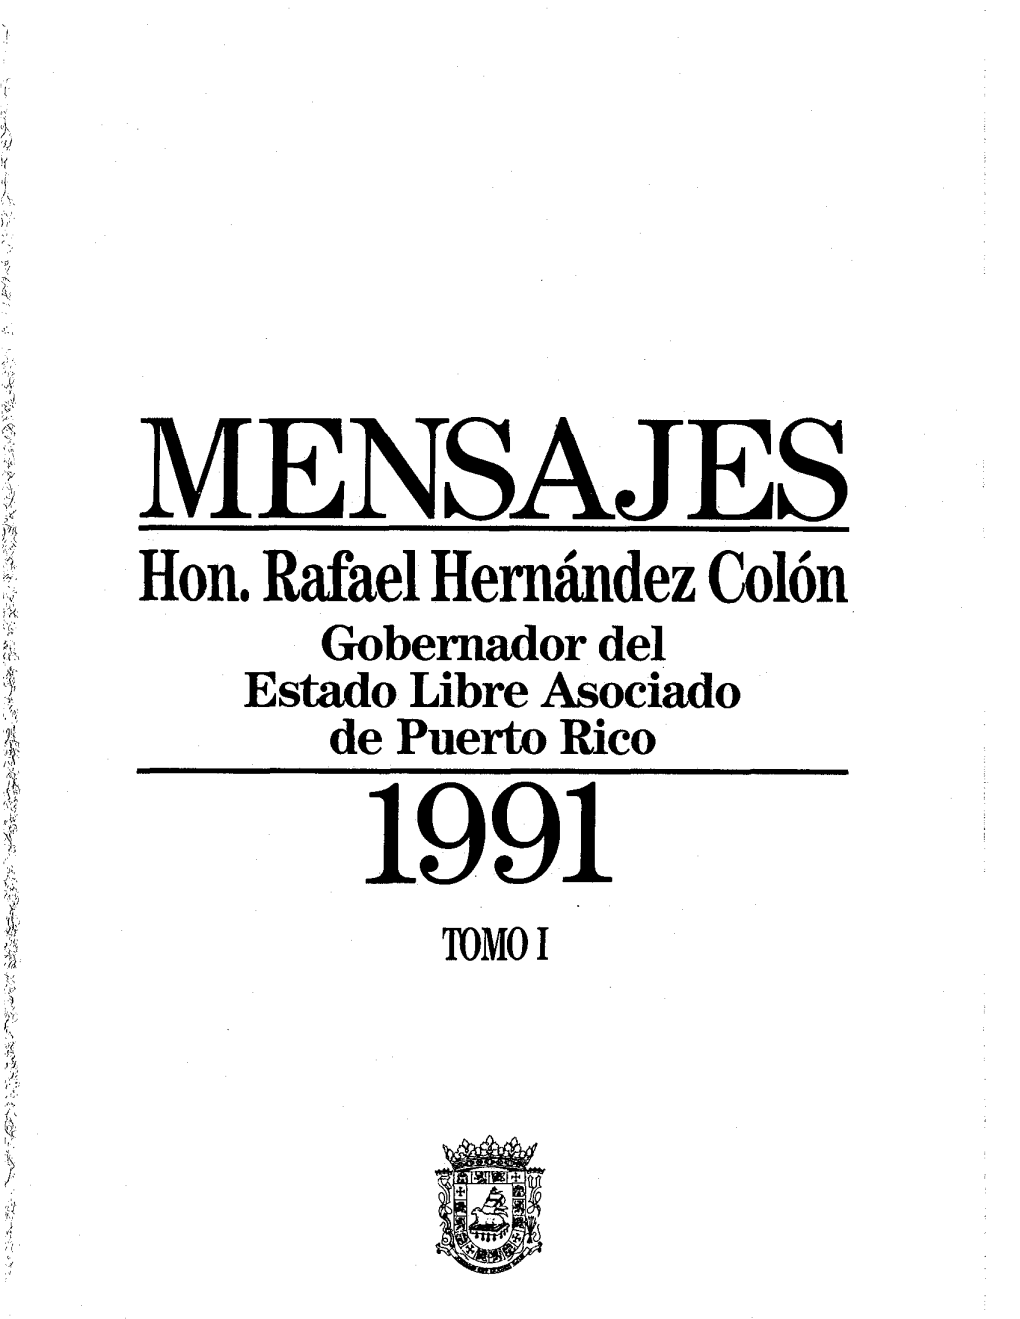 Hon. Rafael Hernández Colón Gobernador Del Estado Libre Asociado De Puerto Rico 1991 TOMO I MENSAJES DEL GOBERNADOR DE PUERTO RICO HON